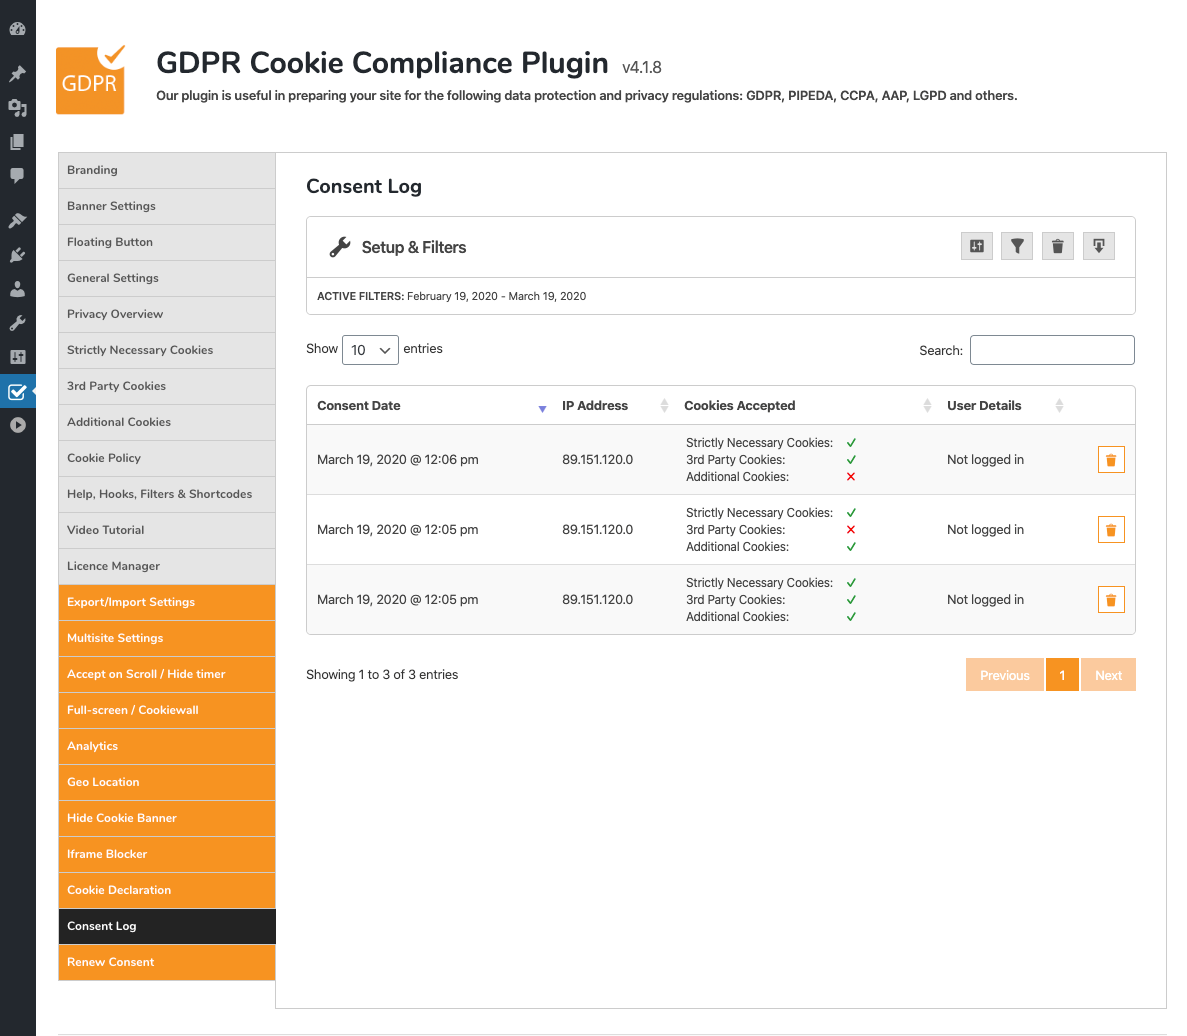 GDPR Cookie Compliance - Admin - Consent Log [Premium]